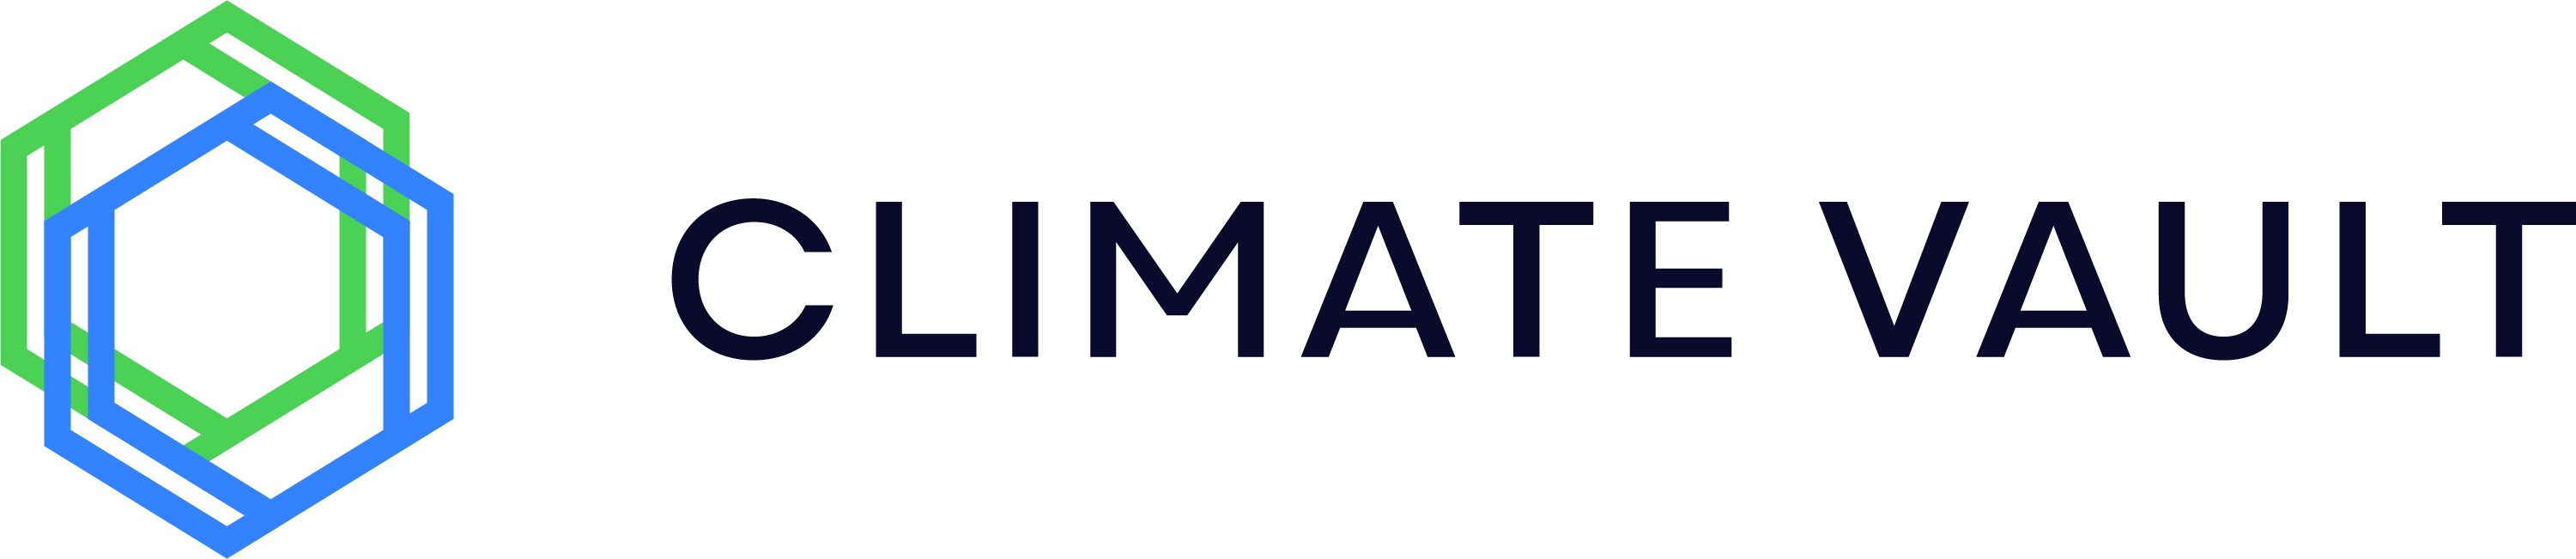 Climate Vault logo